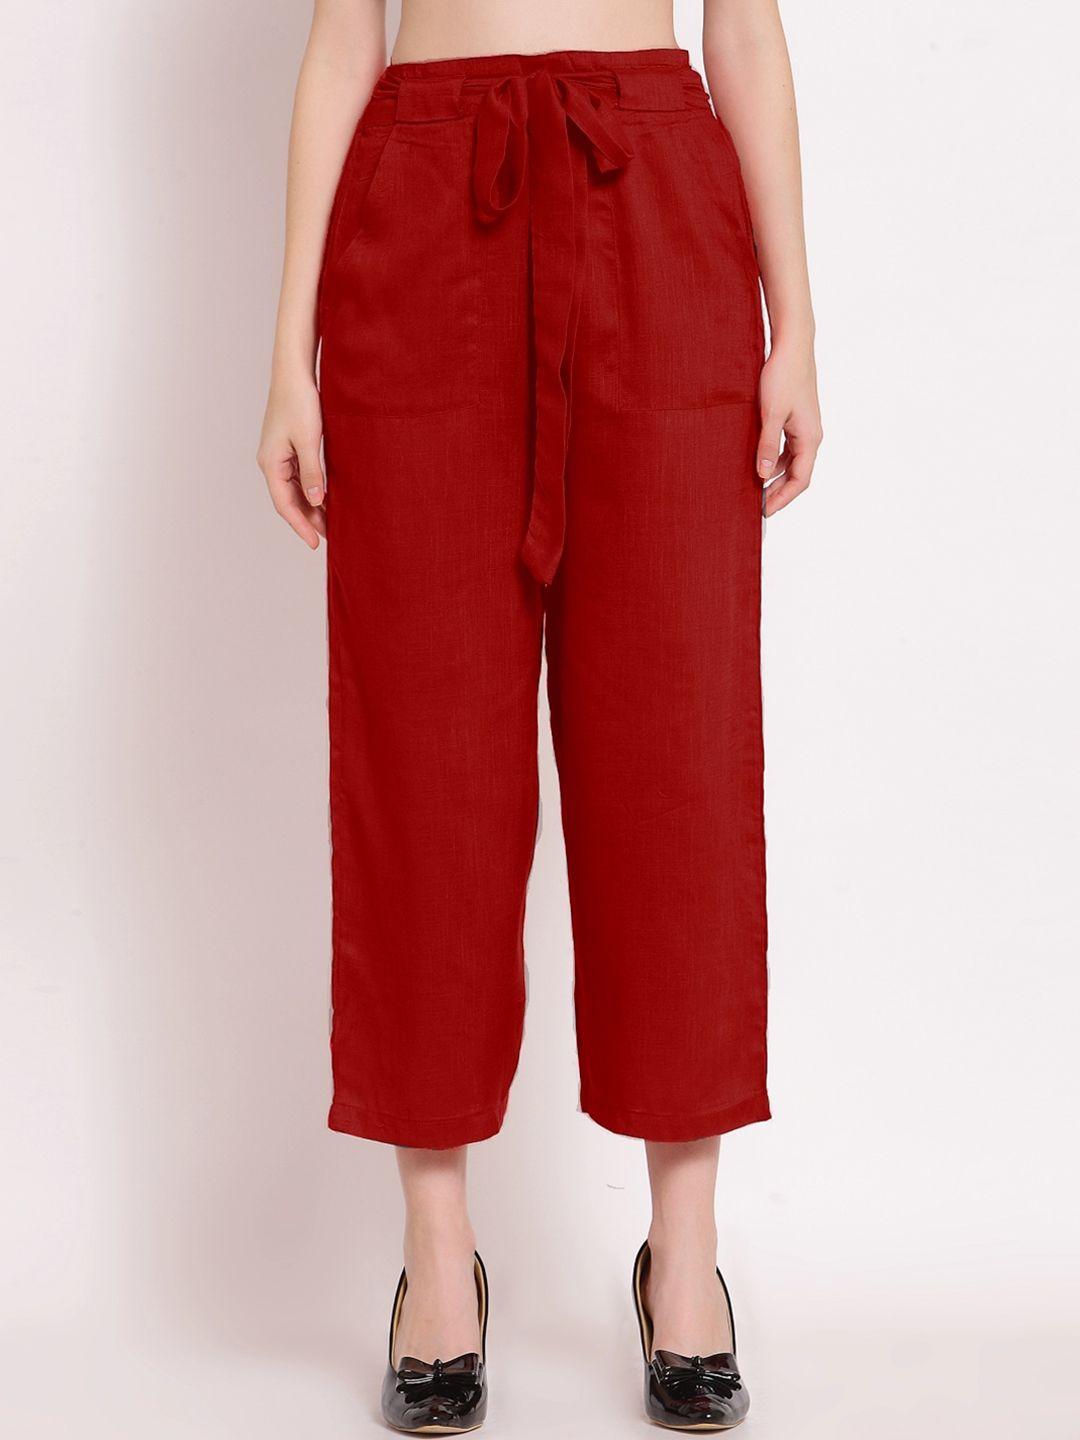 patrorna-women-smart-fit-parallel-trousers